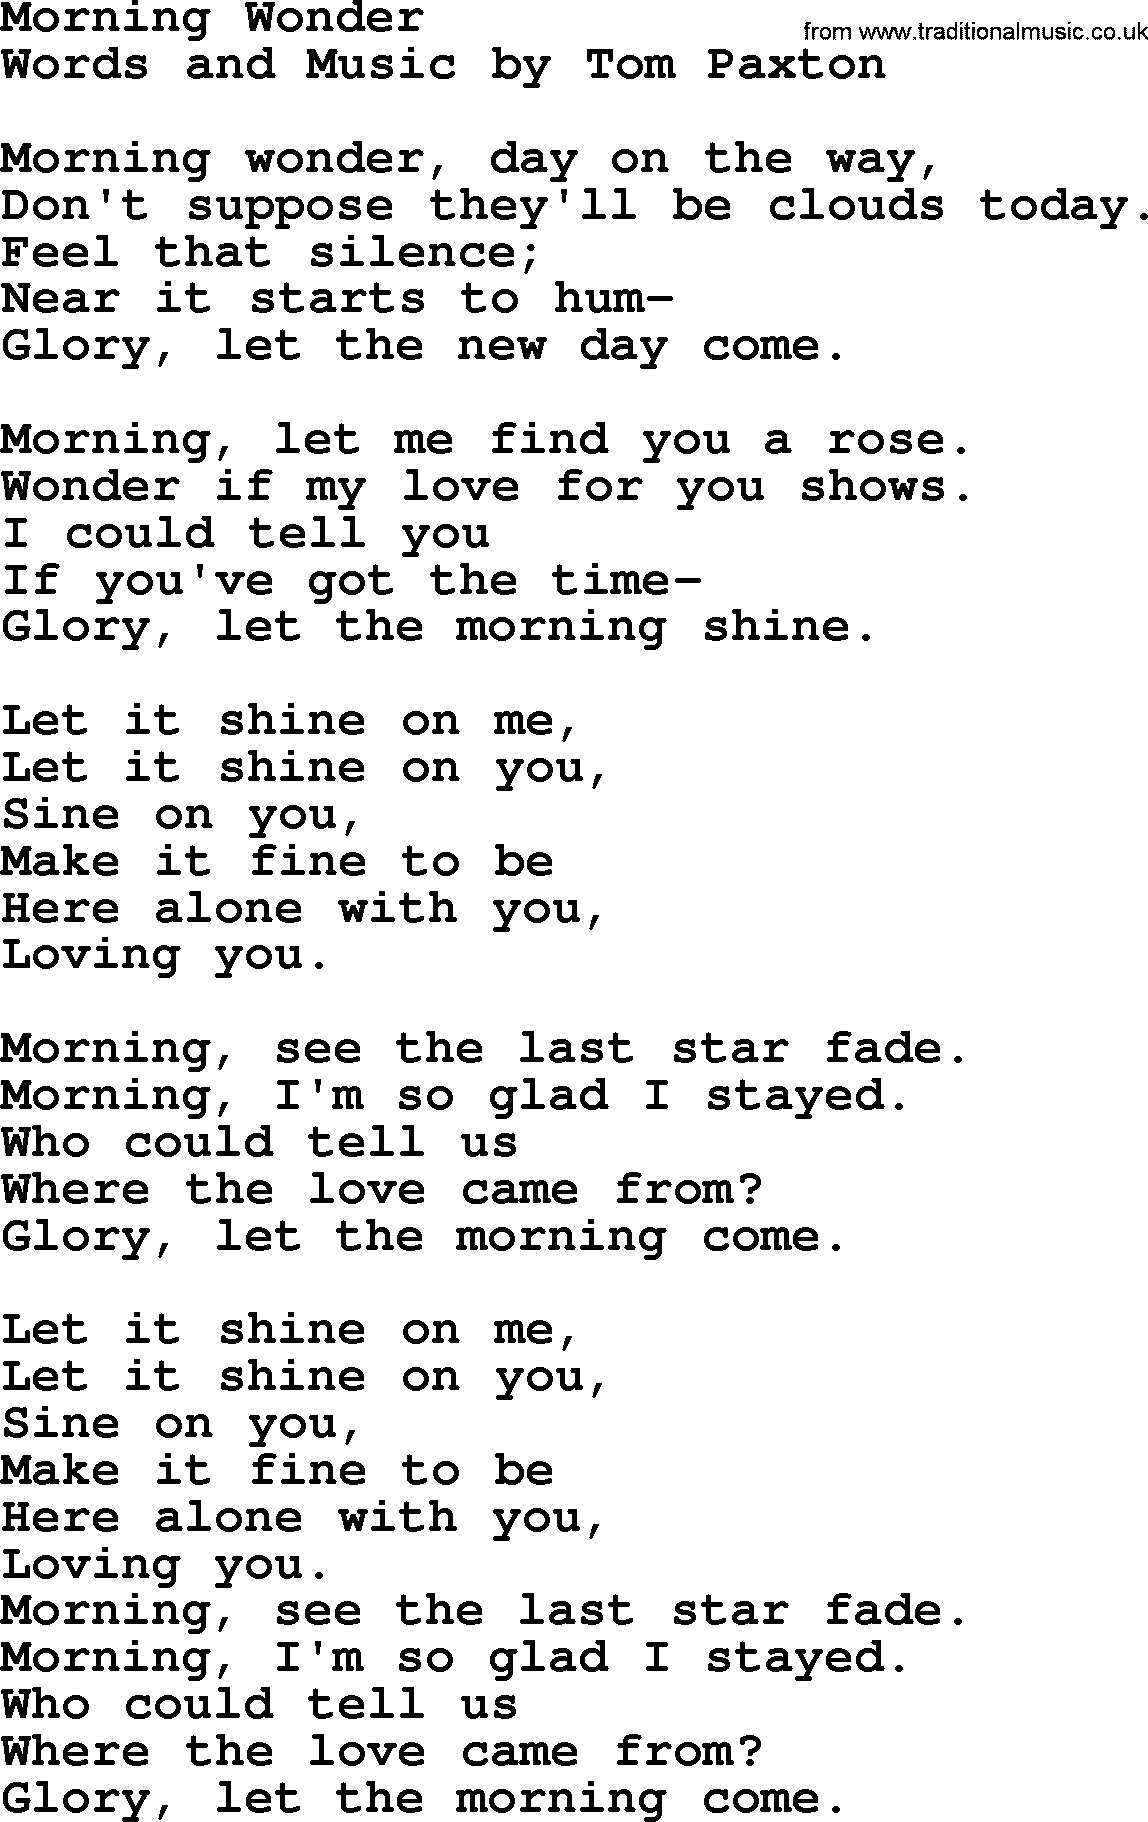 Tom Paxton song: Morning Wonder, lyrics